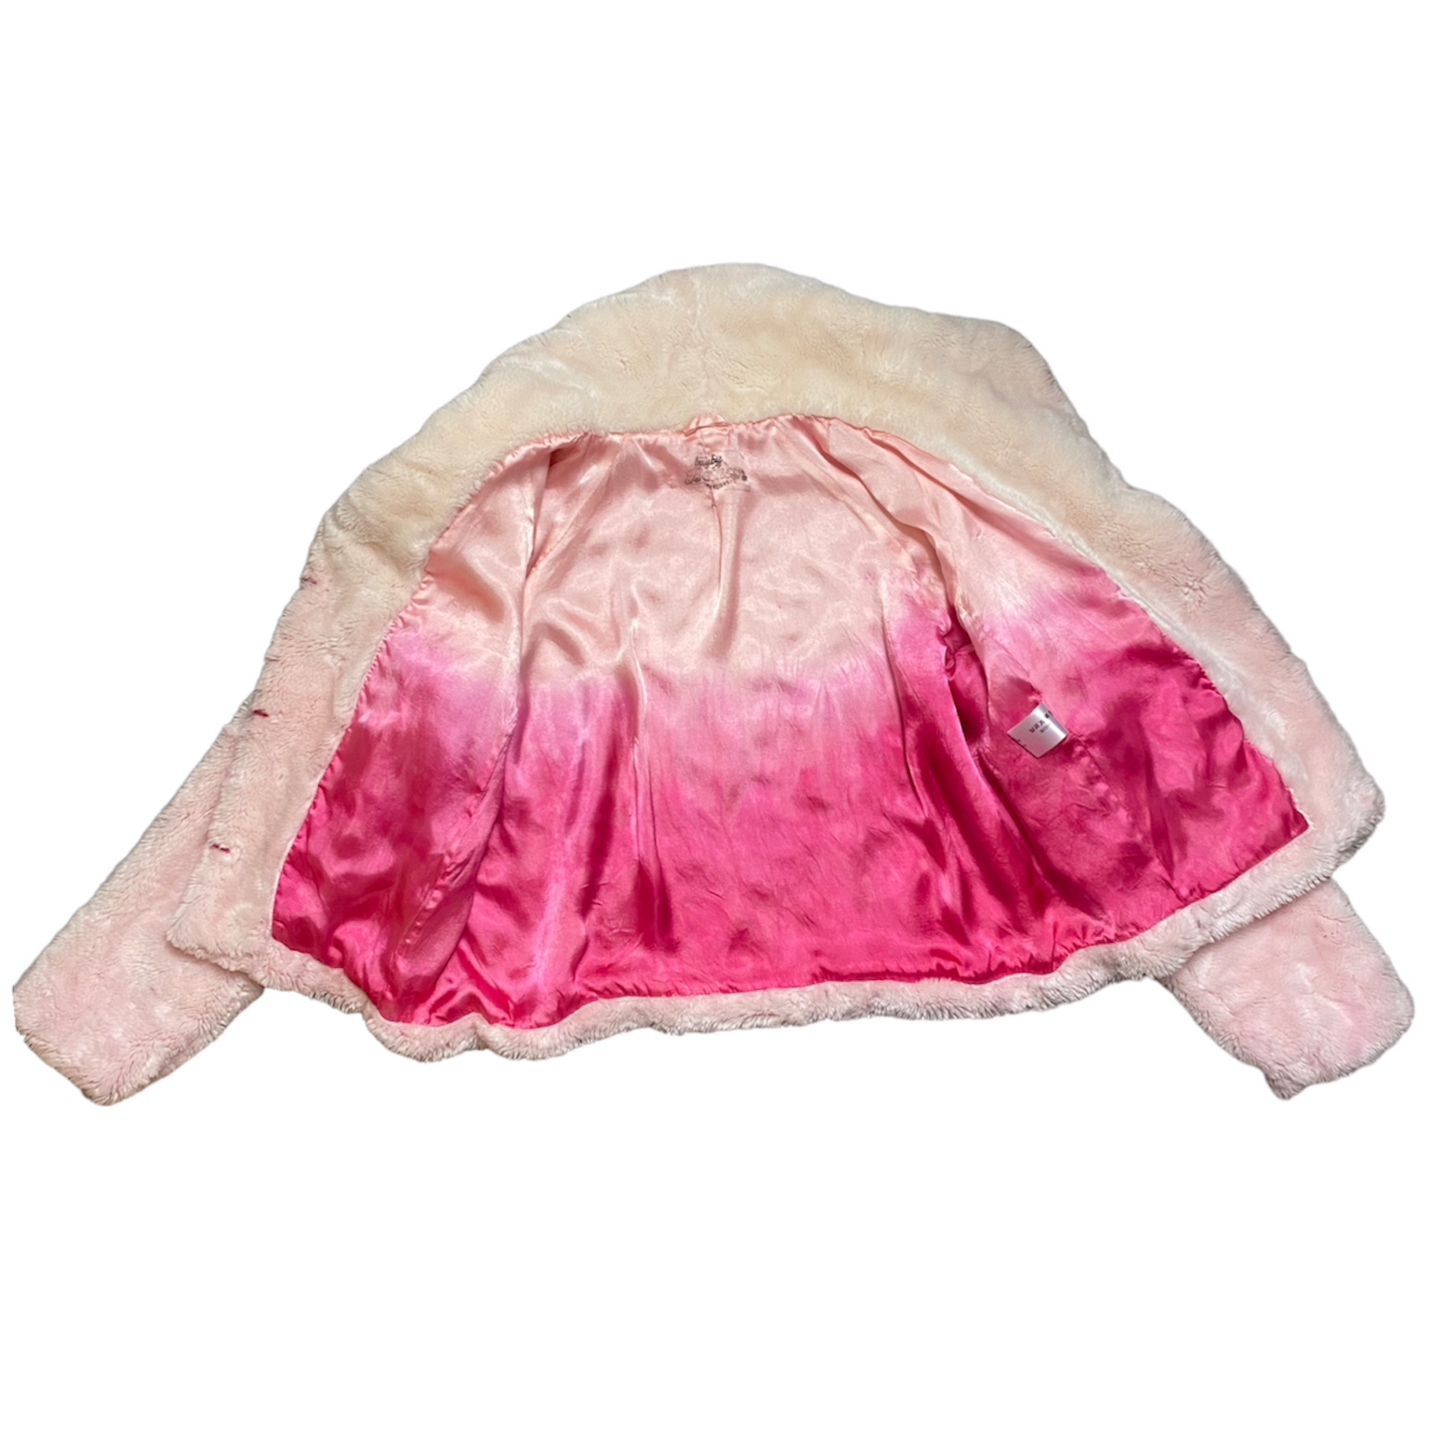 Light Pink Fluffy Coat